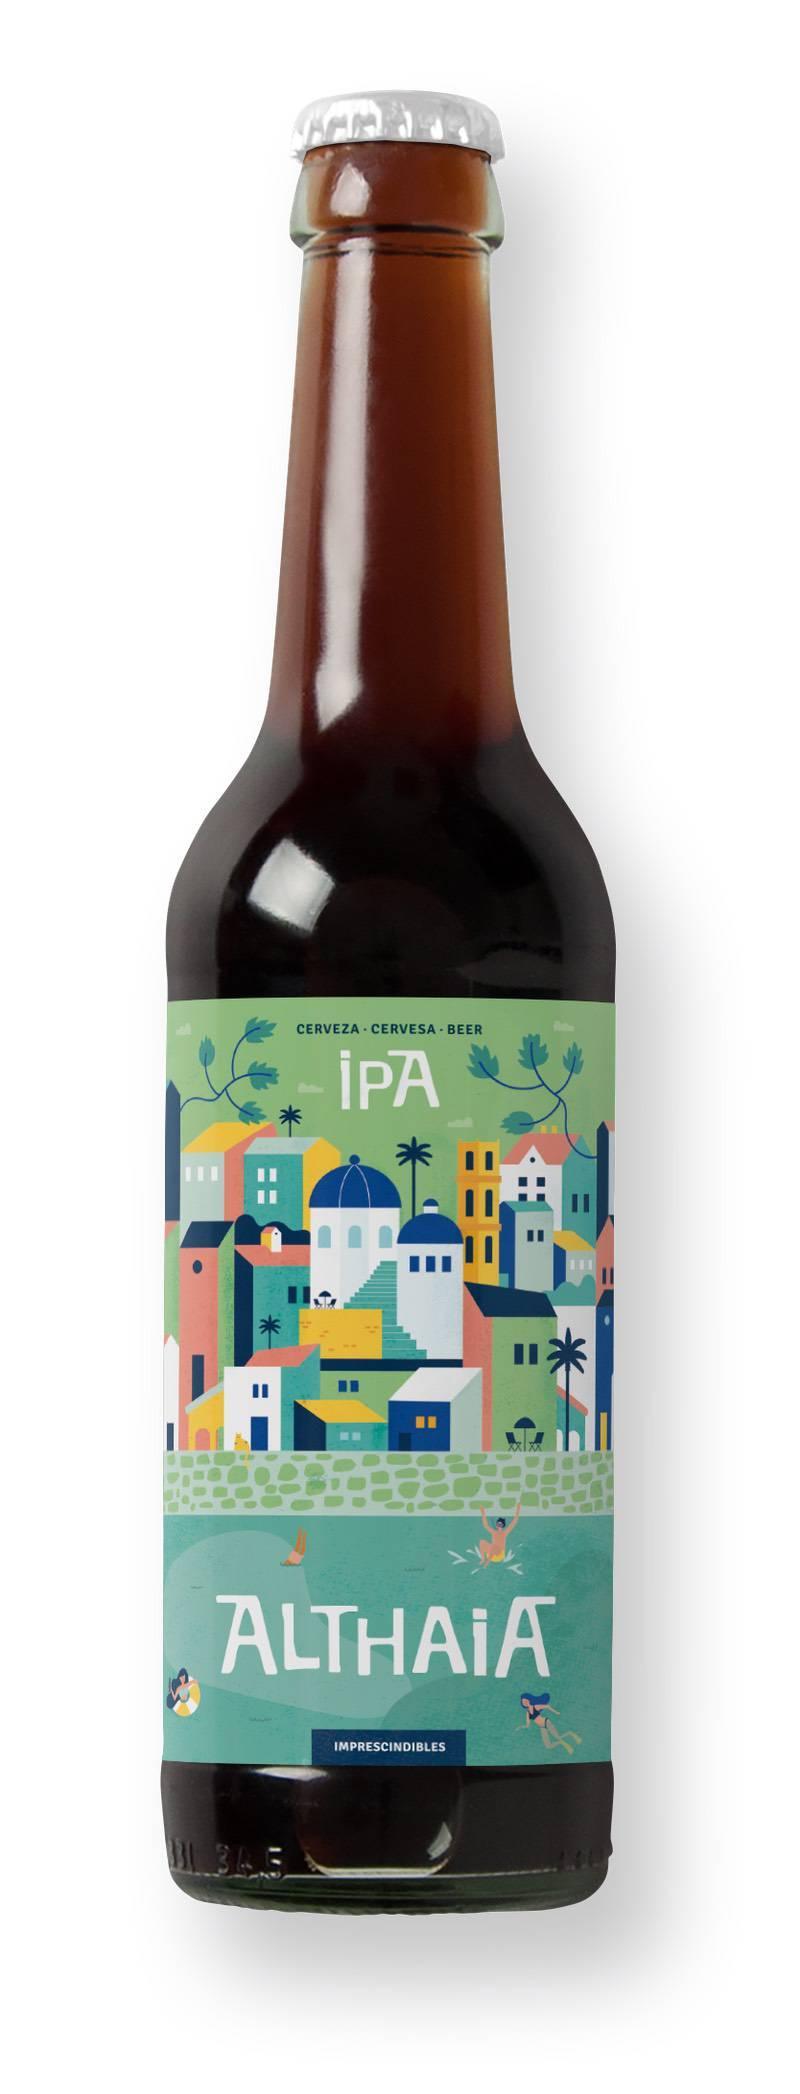 Althaia Mediterranean IPA botella 33cl - Beer Sapiens